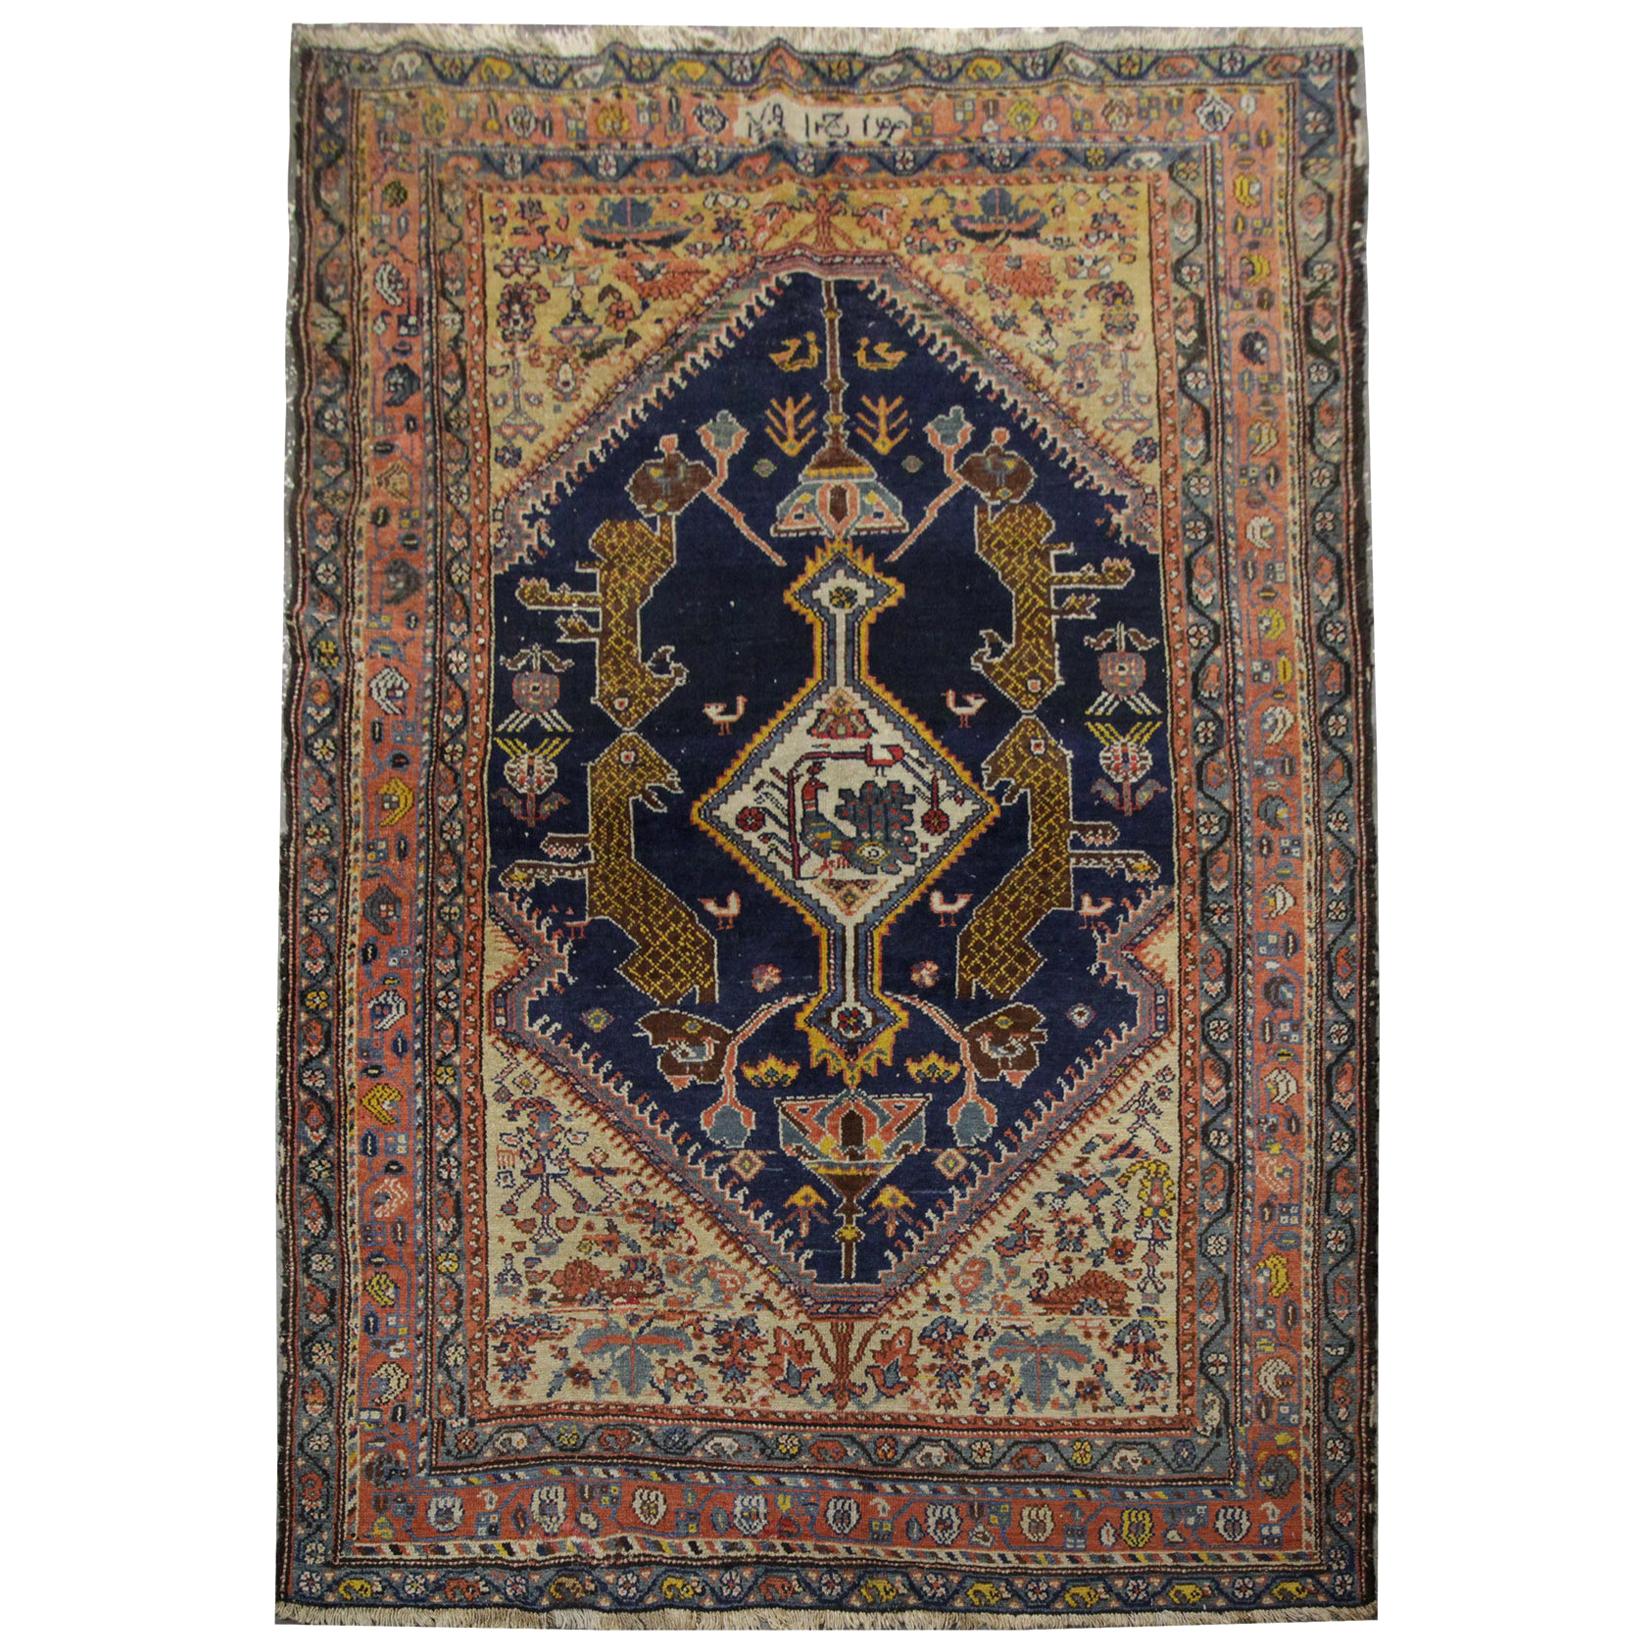 Antique Carpet Armenian Rug, Blue and Orange Caucasian Carpet Living Room Rug  For Sale